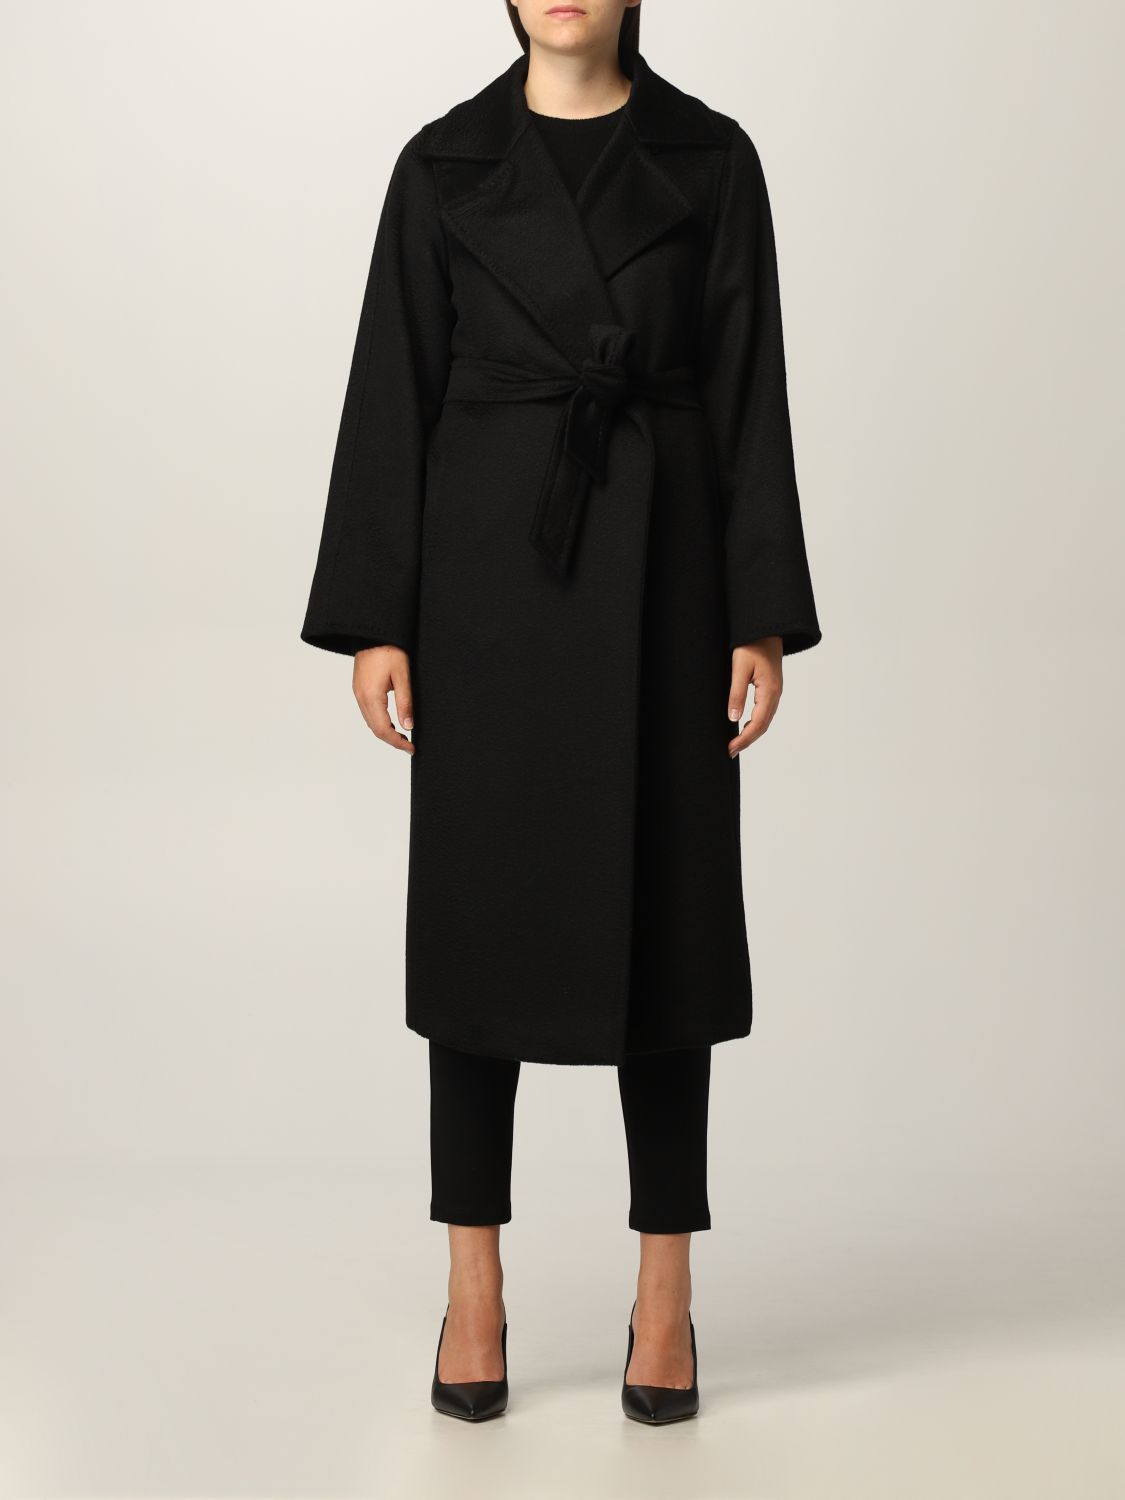 MAX MARA: wool coat - Black | Coat Max Mara 10161413600 3MANUEL GIGLIO.COM